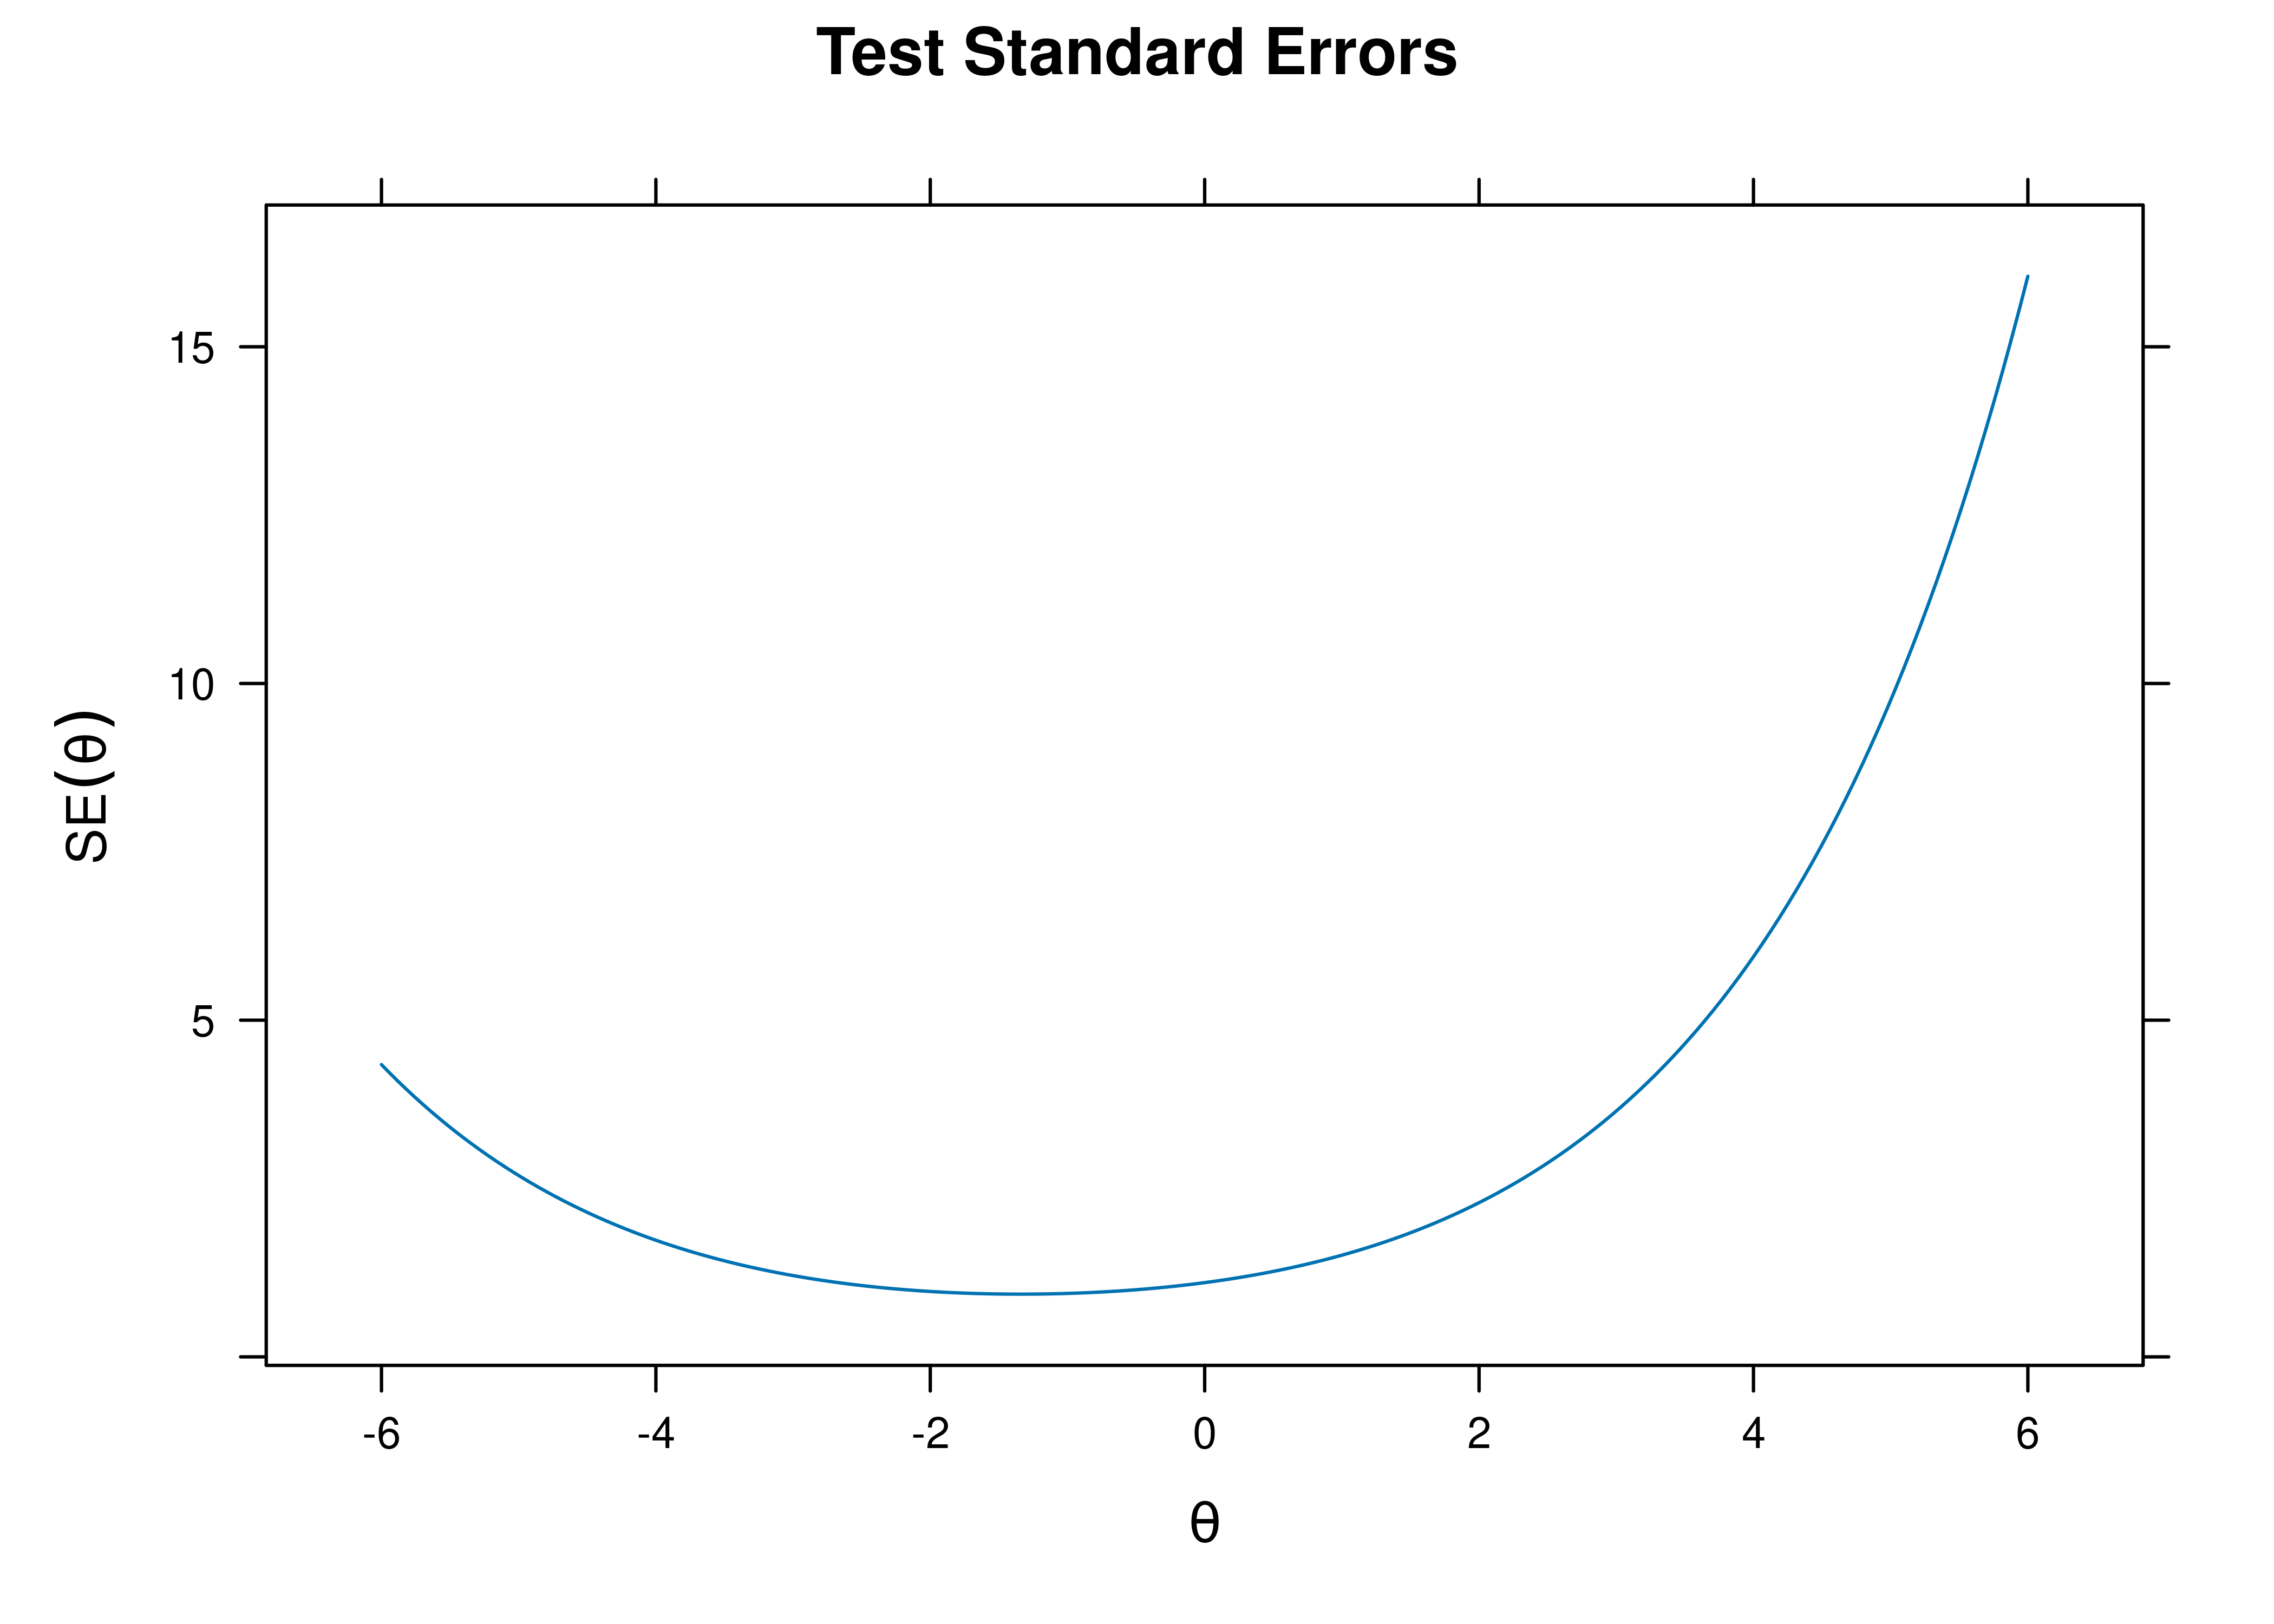 Test Standard Error of Measurement From Rasch Item Response Theory Model.